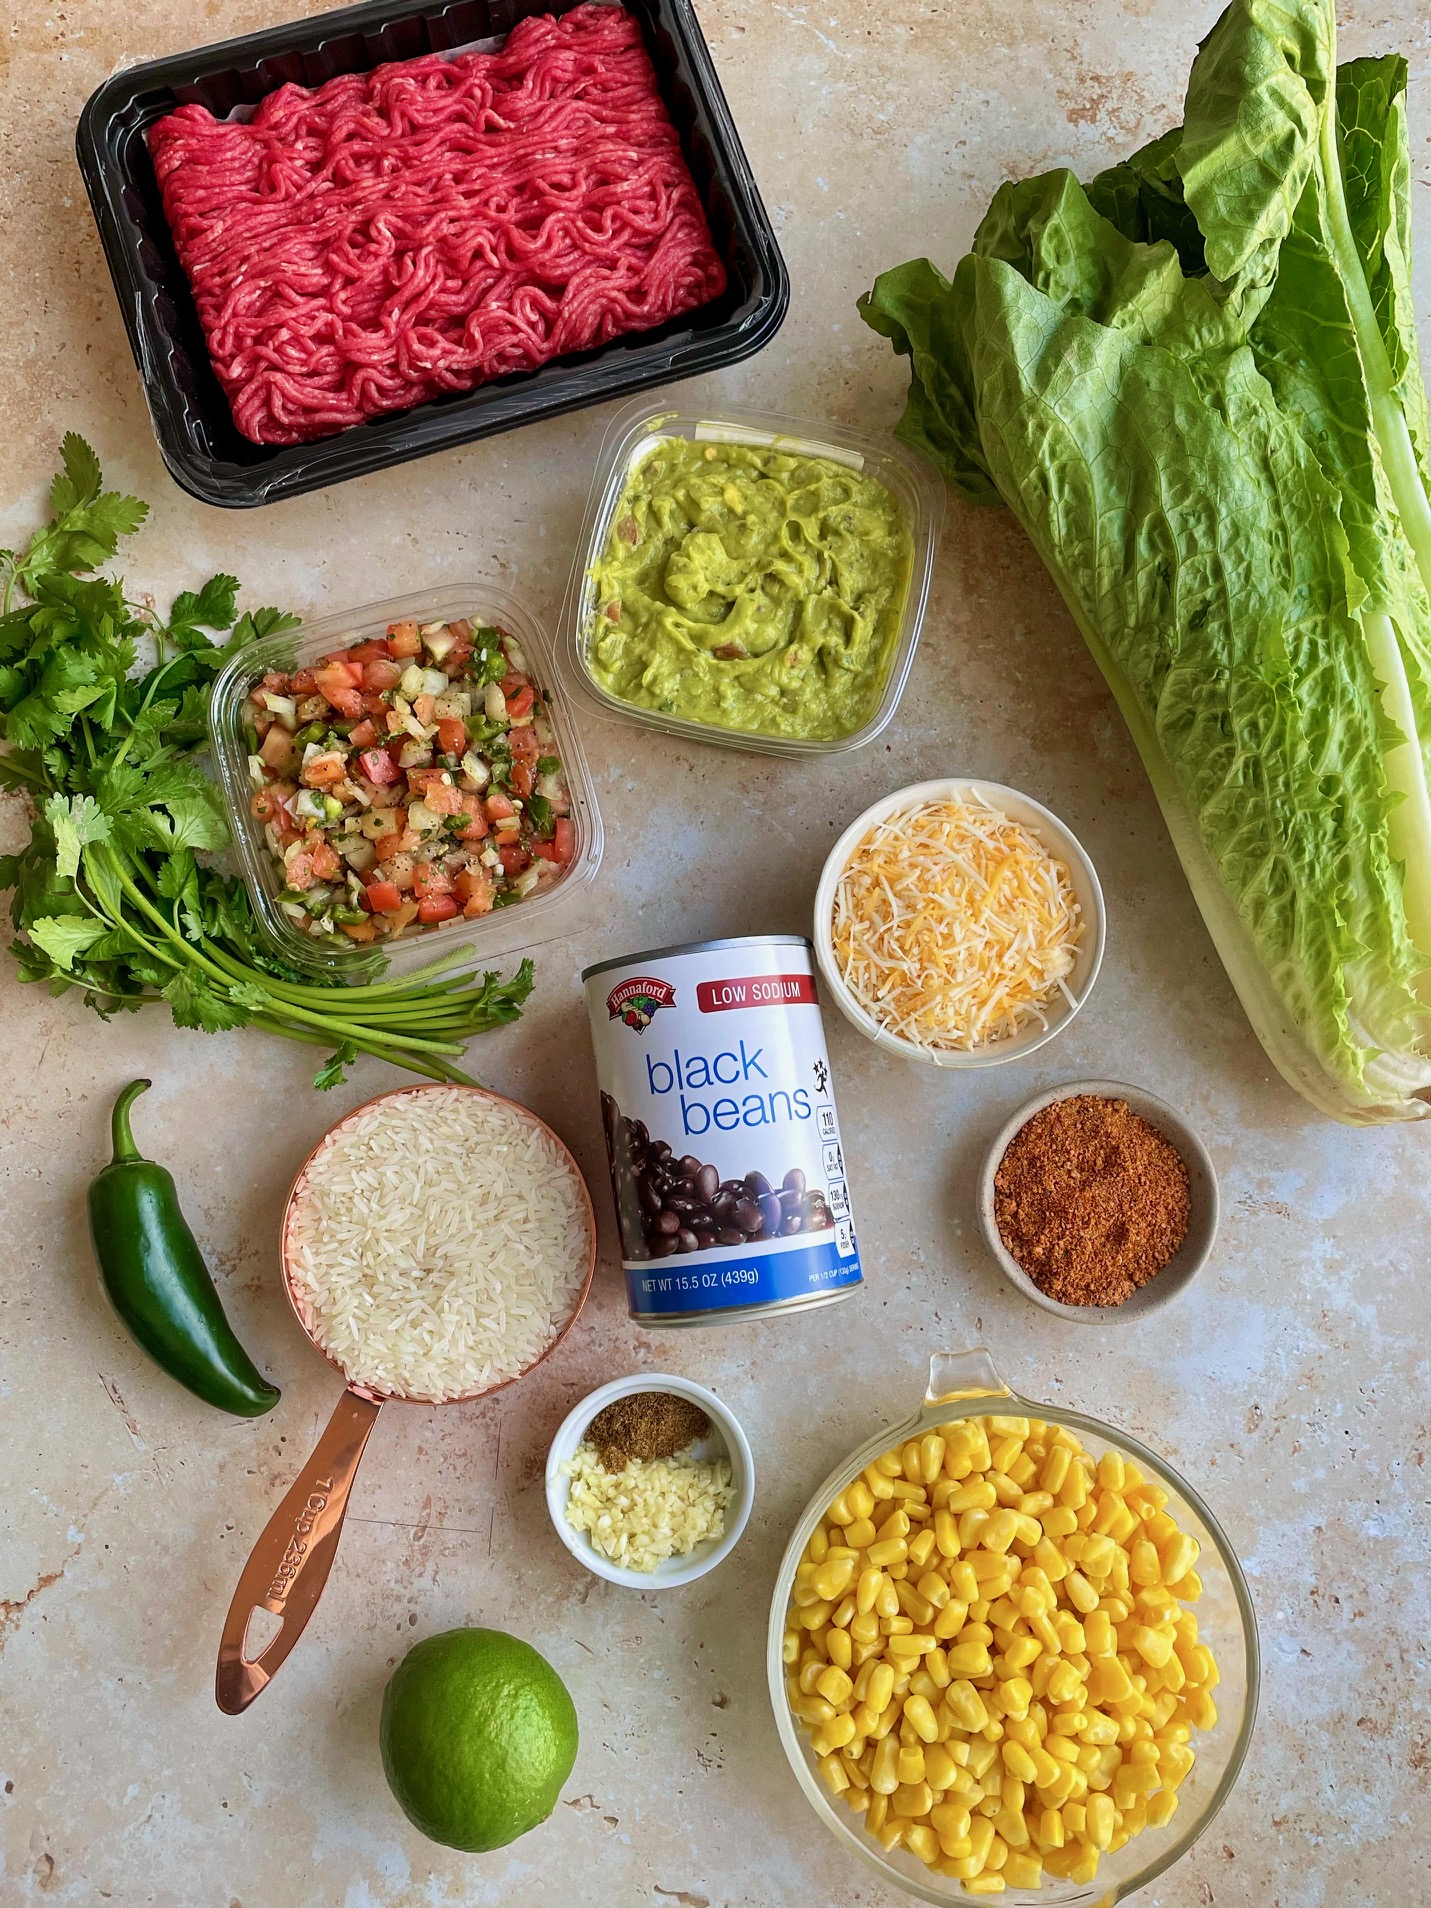 The ground beef burrito bowl recipe ingredients.